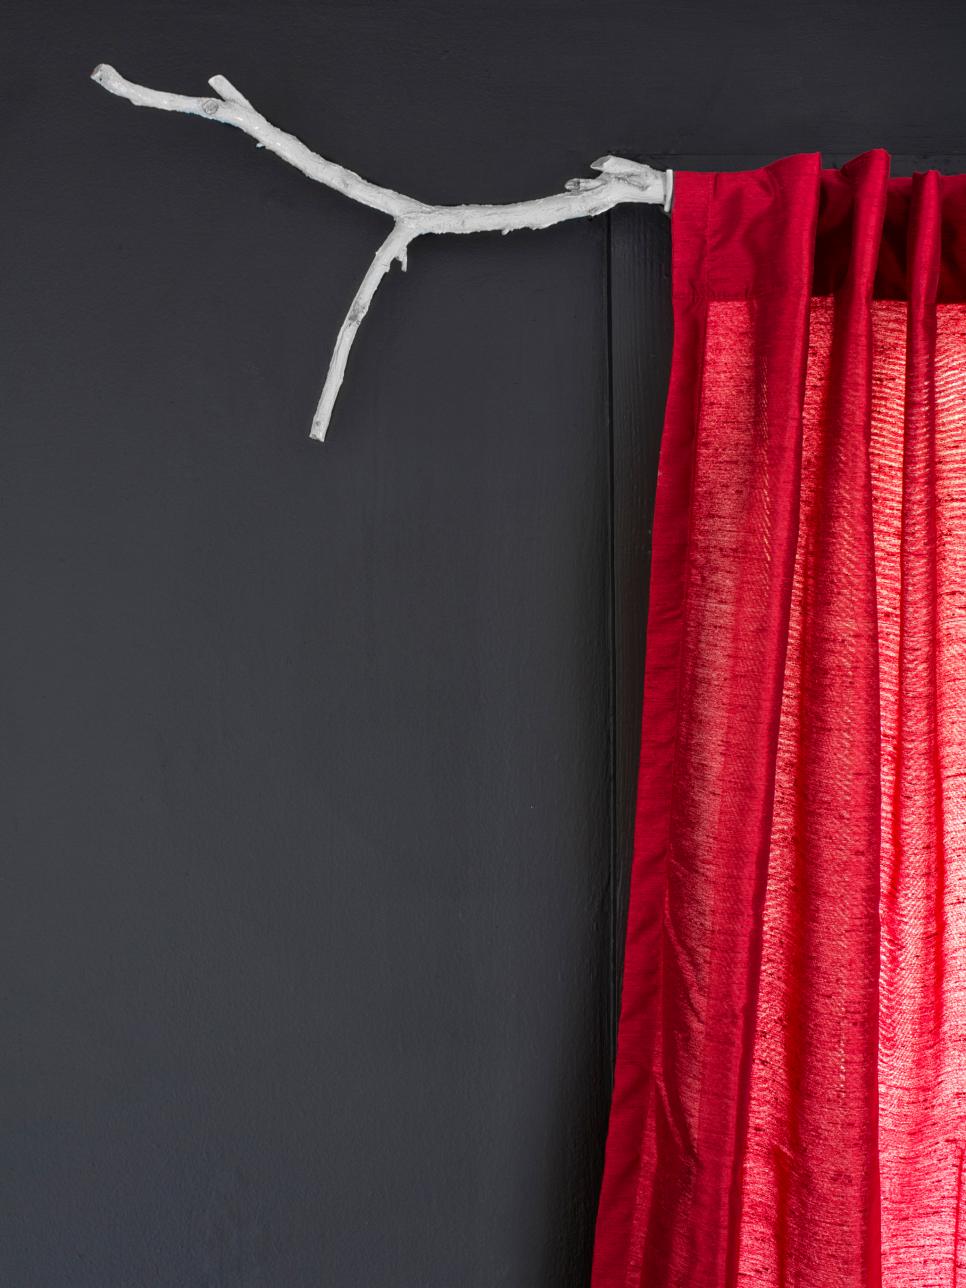 Shower Curtain Tie Back Hooks Hardware for Window Screens